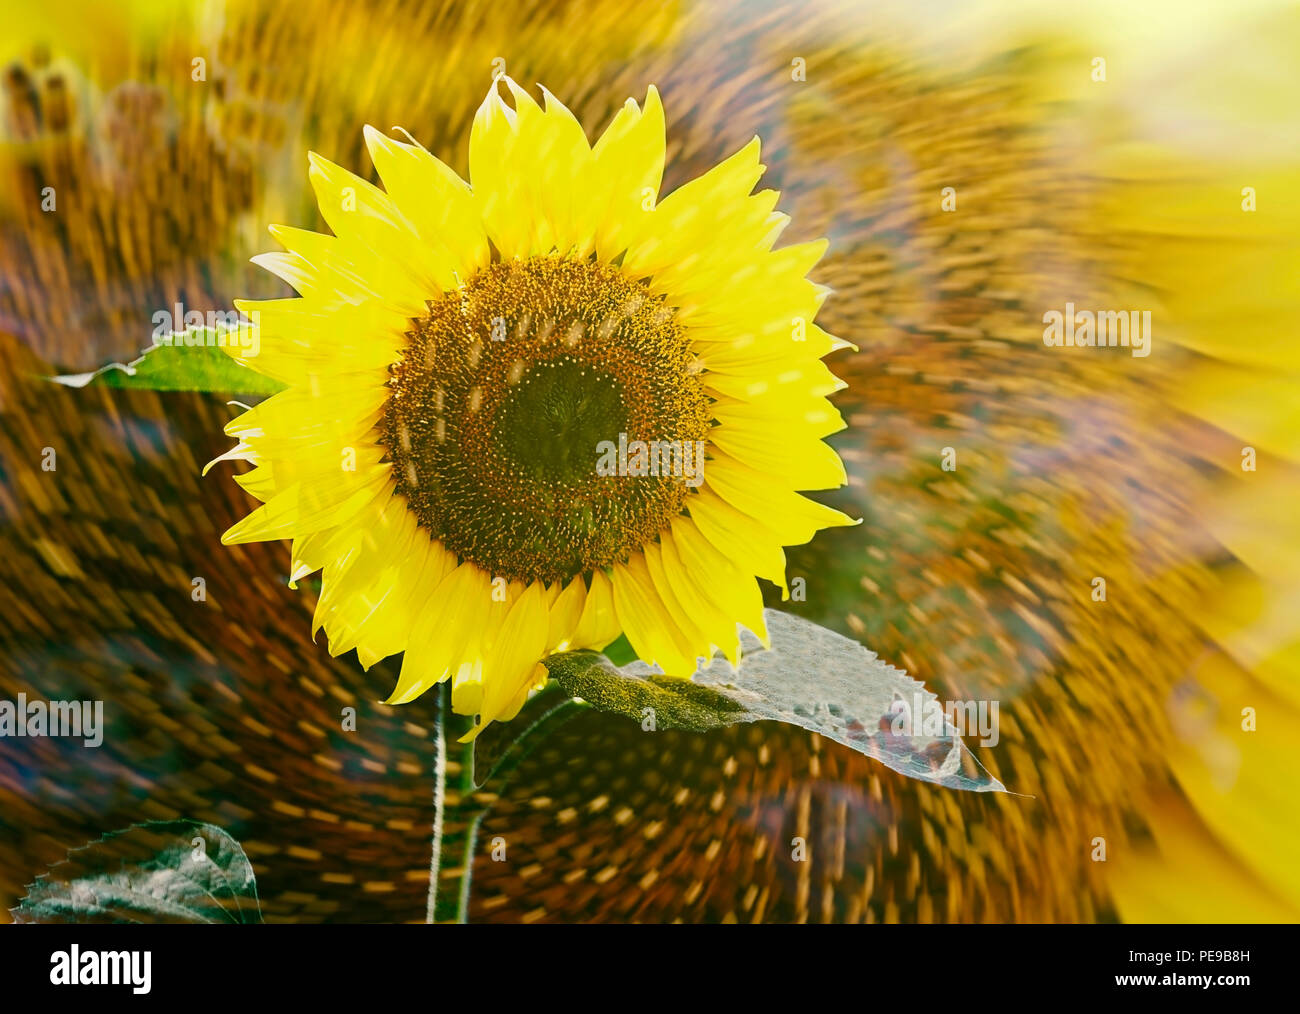 sunflower spinning Stock Photo